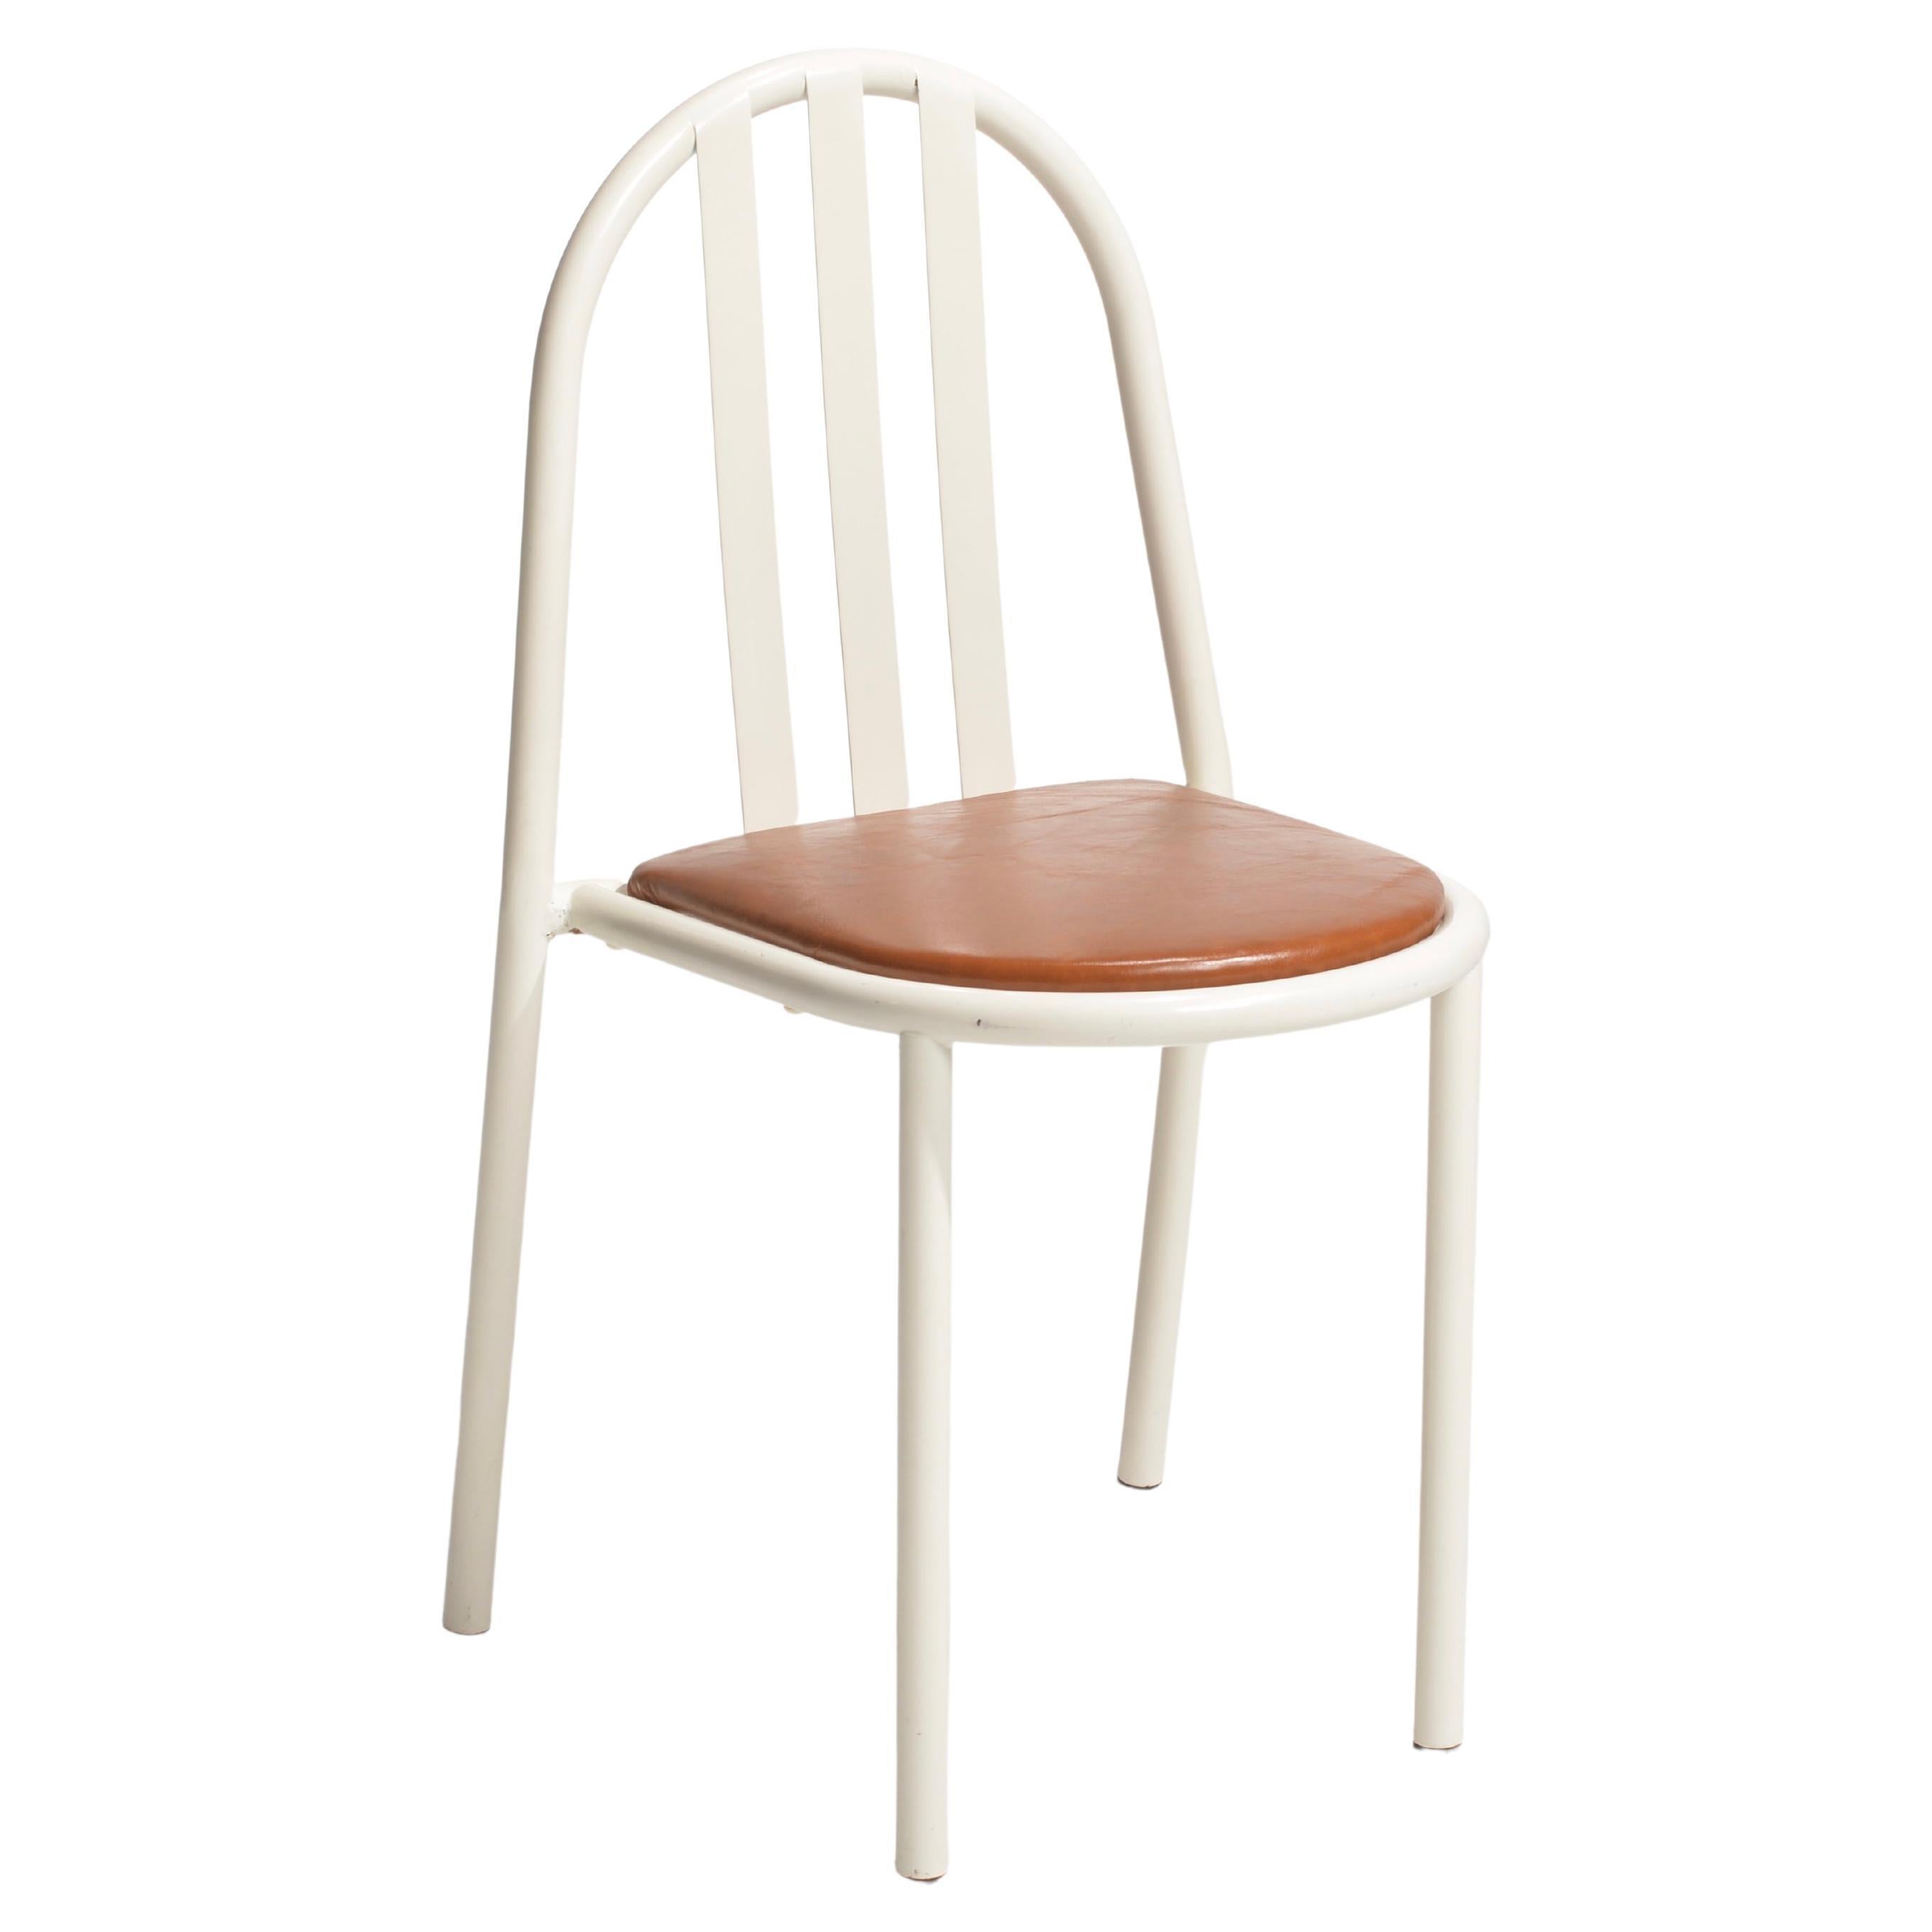 Robert Mallet-Stevens chaise blanche empilable modèle n°222 Bauhaus French